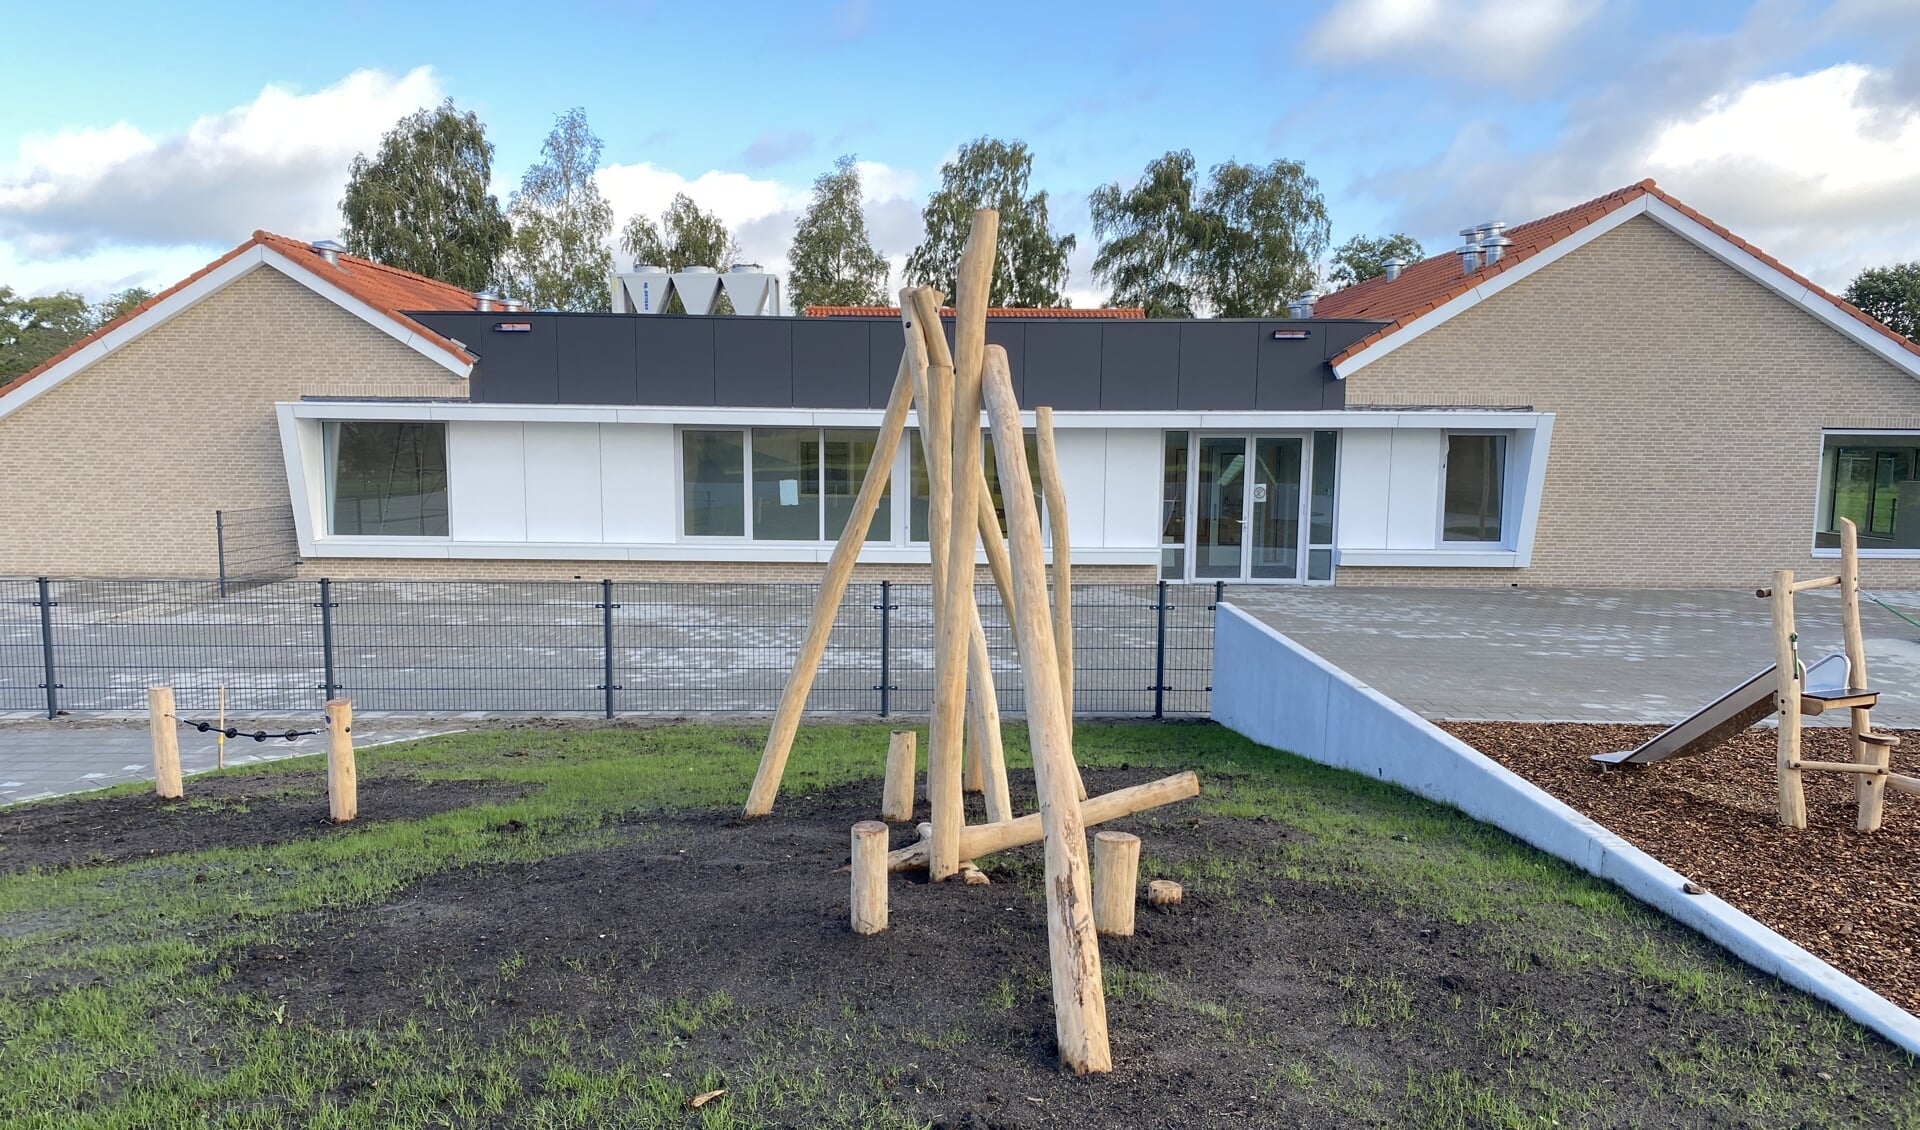 basisschool De Twirrewyn in Donkerbroek eerste gasloze school in Ooststellingwerf